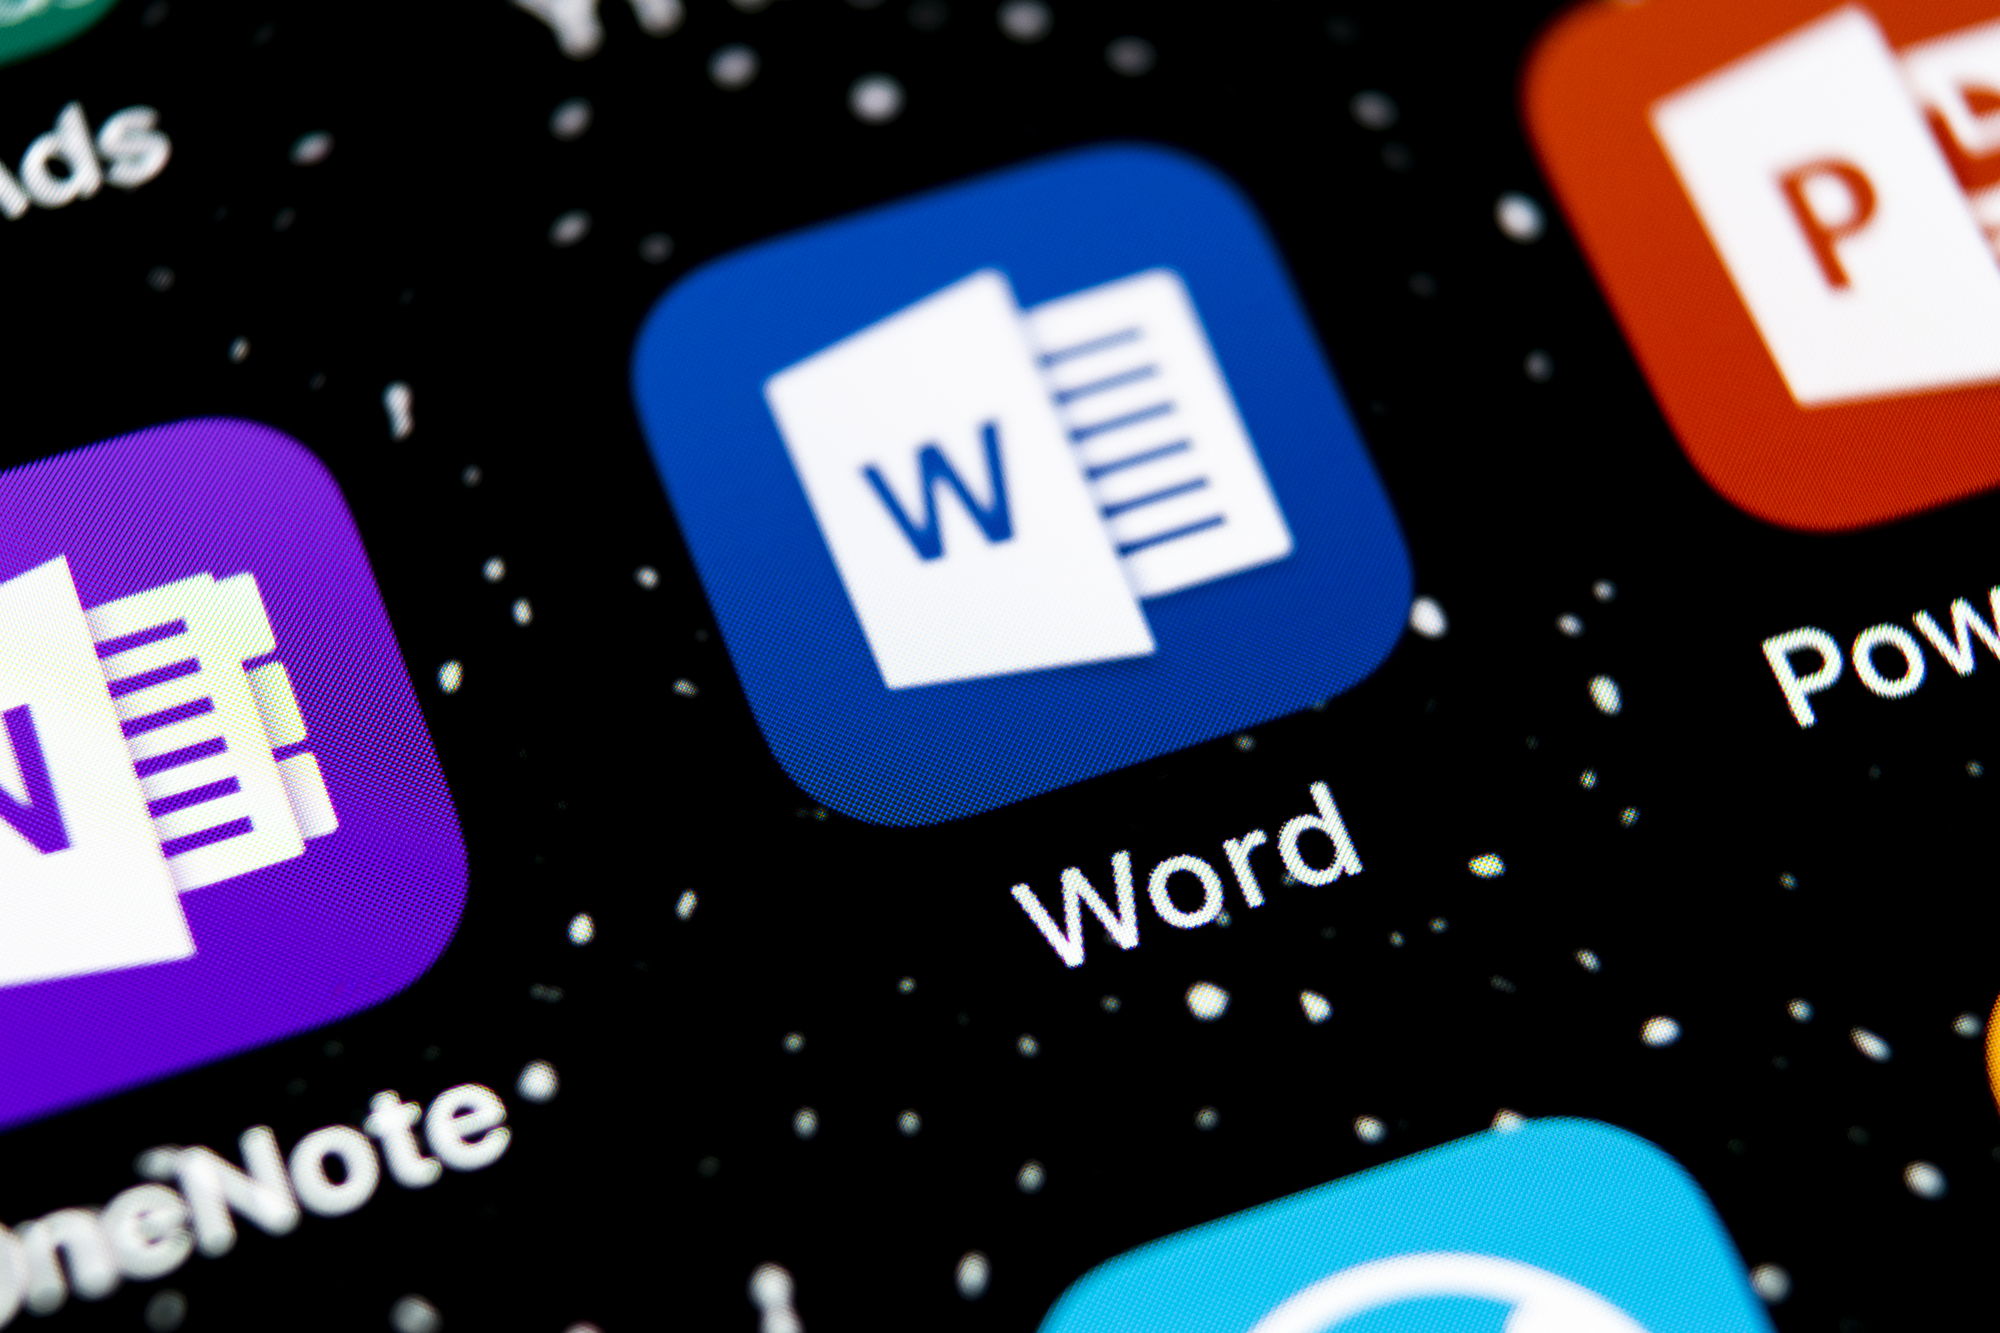 Microsoft word app icon